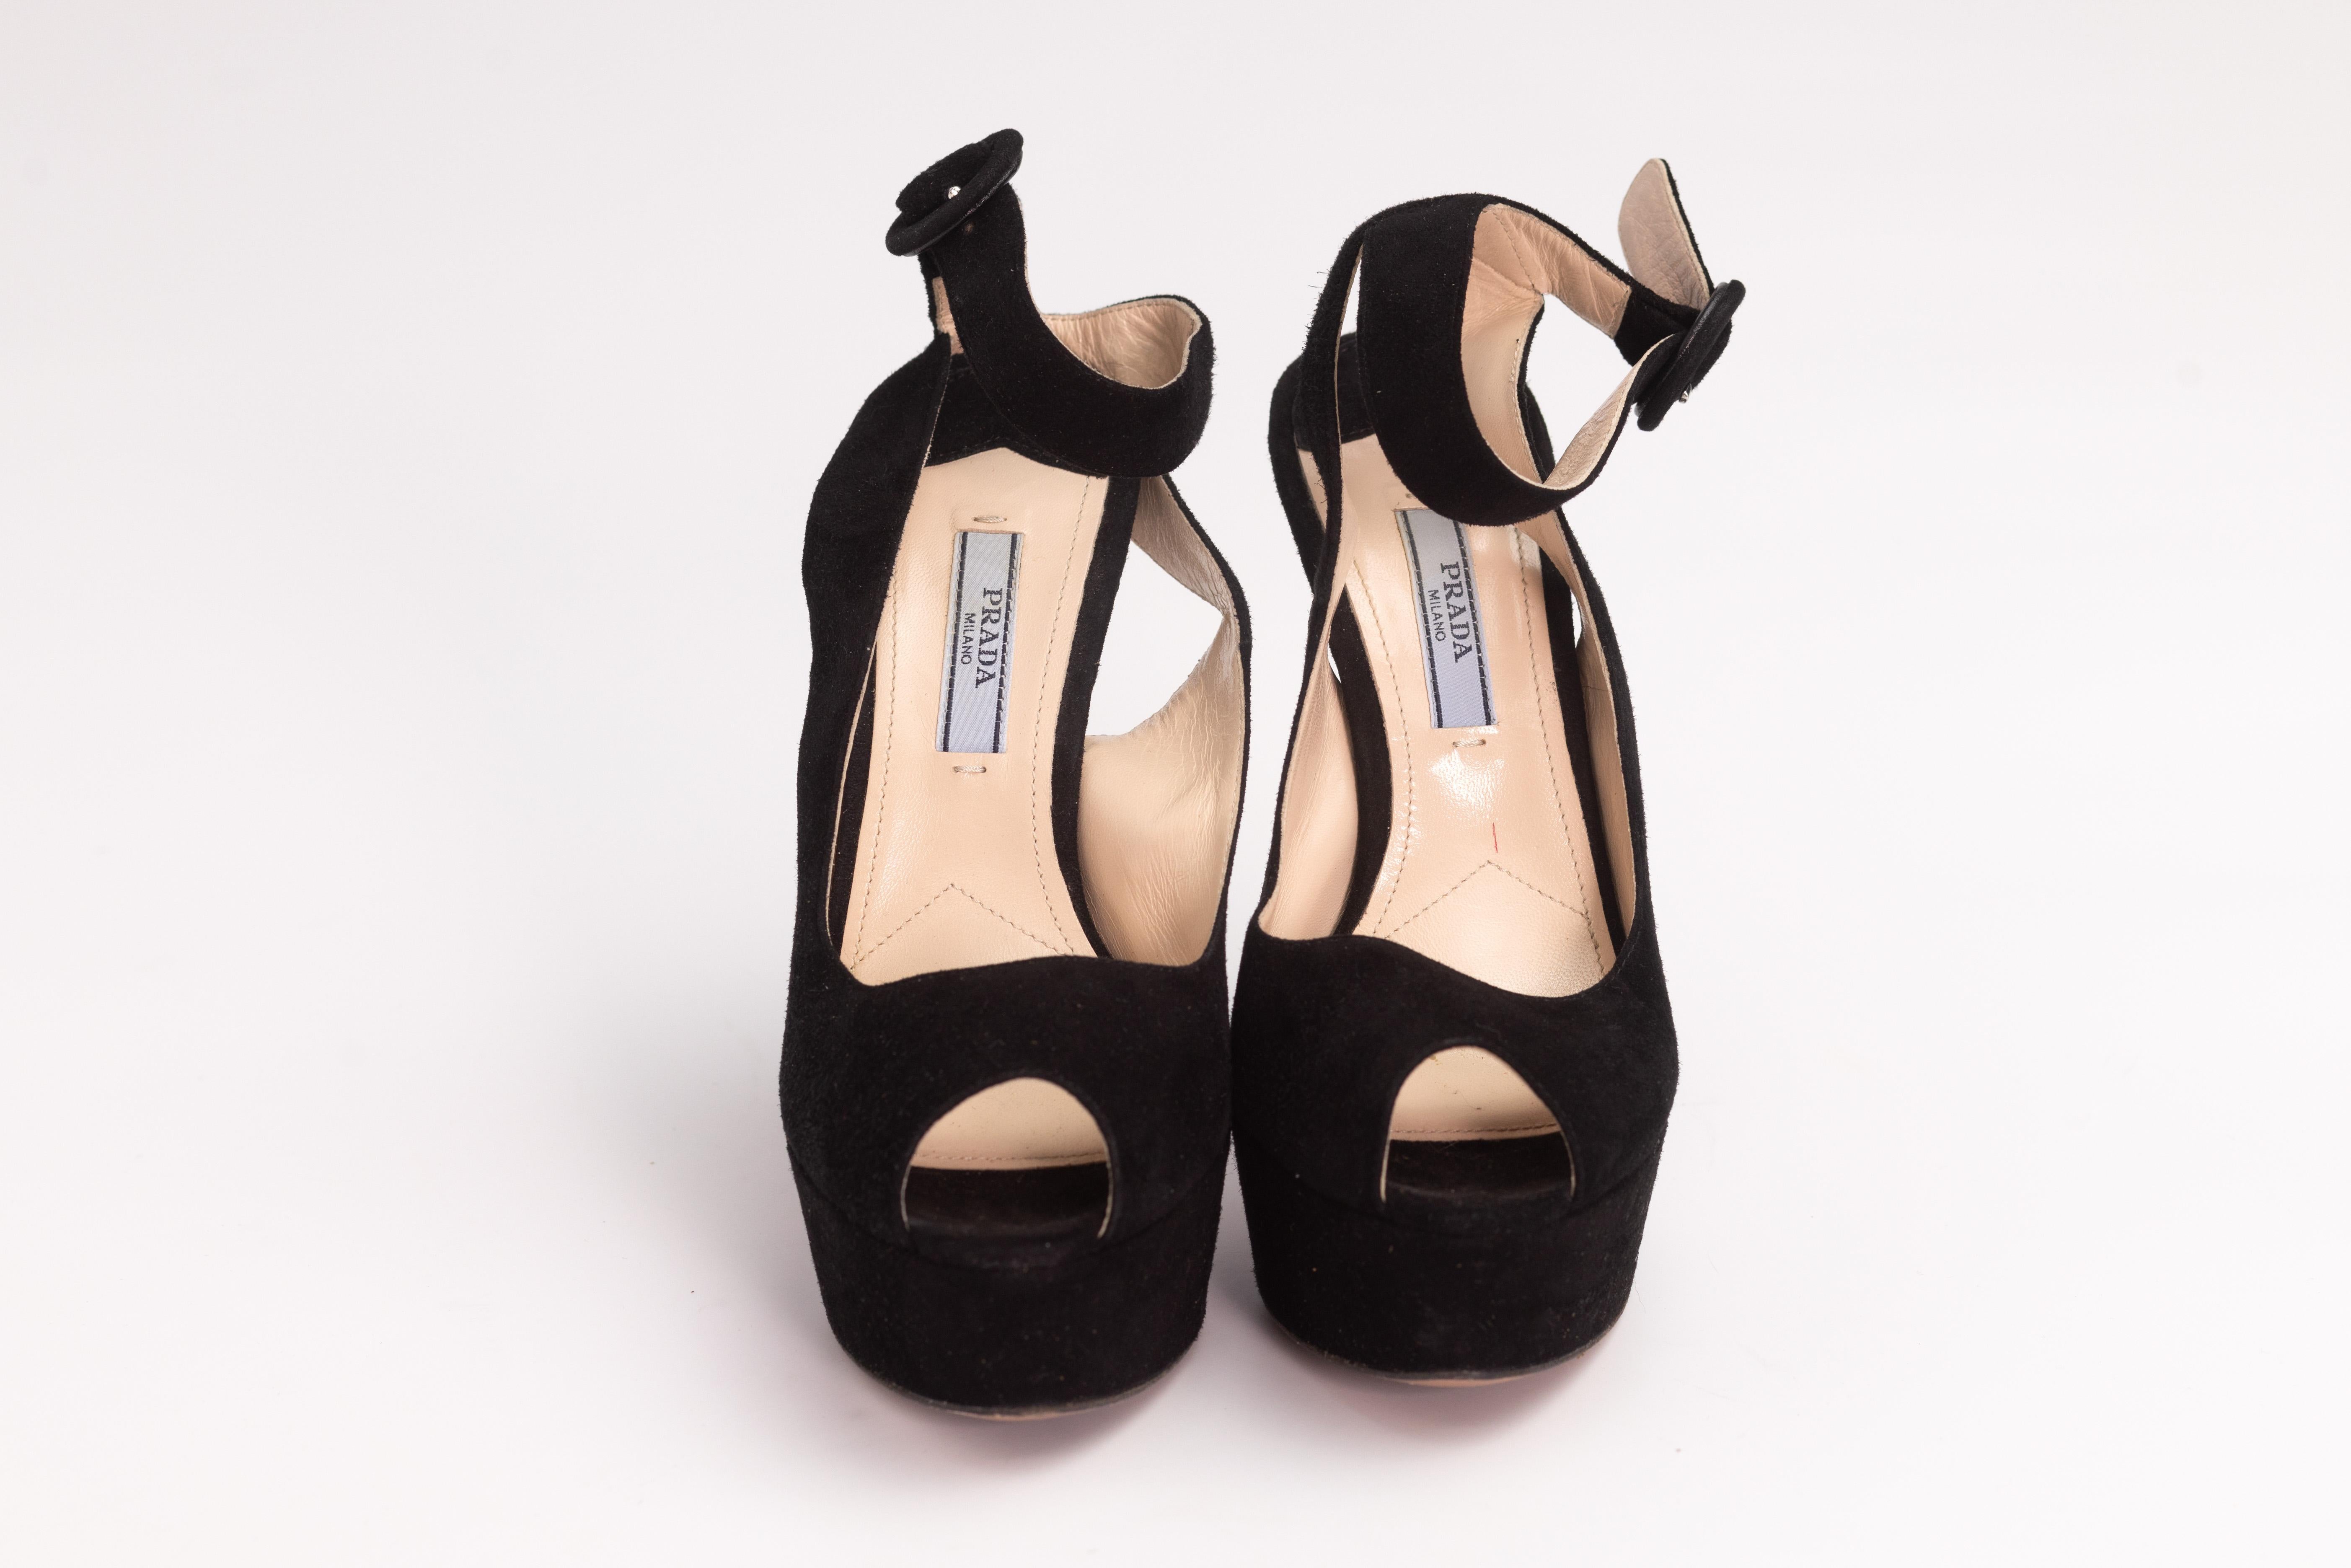 Prada Pumps Black Suede Platform Ankle Strap Peep Toe Heels (EU 36) In Good Condition For Sale In Montreal, Quebec